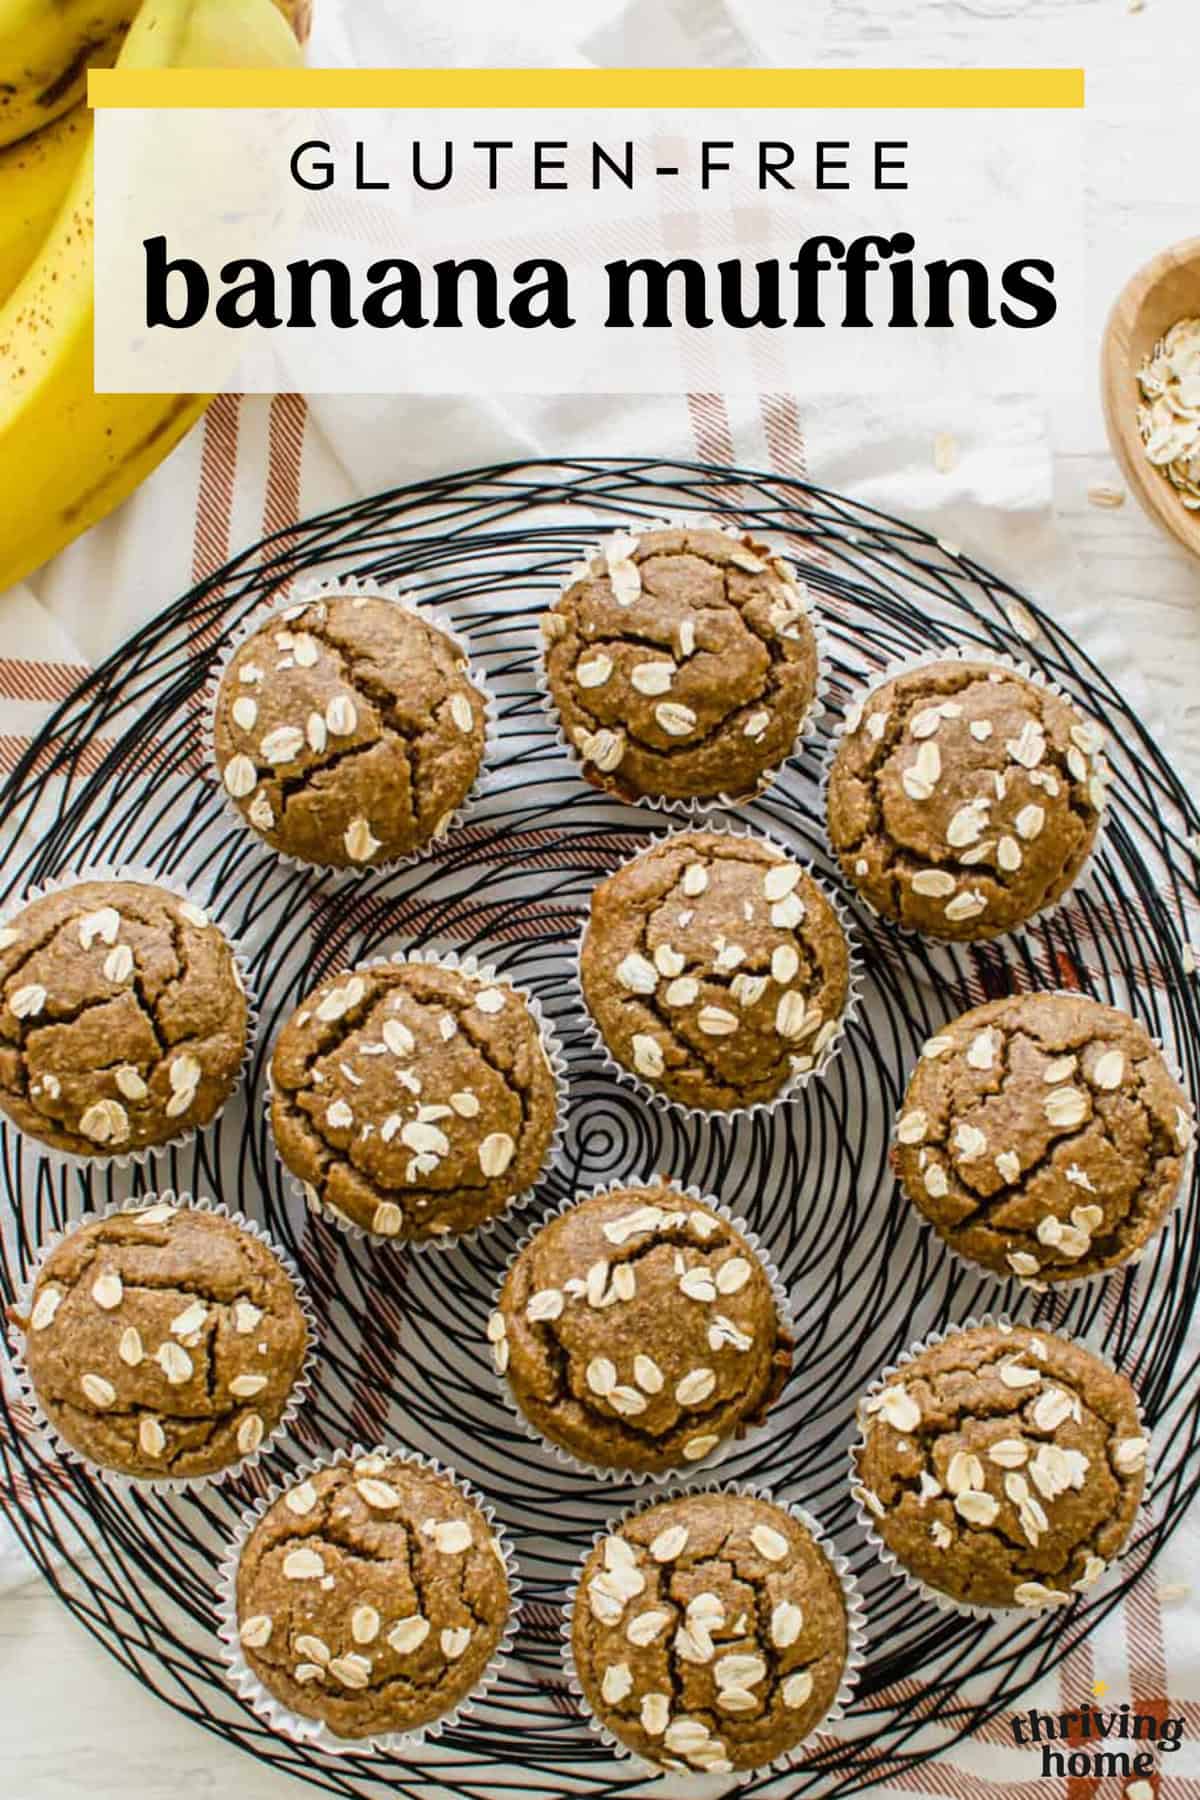 Gluten-free banana muffins on a wire platter.